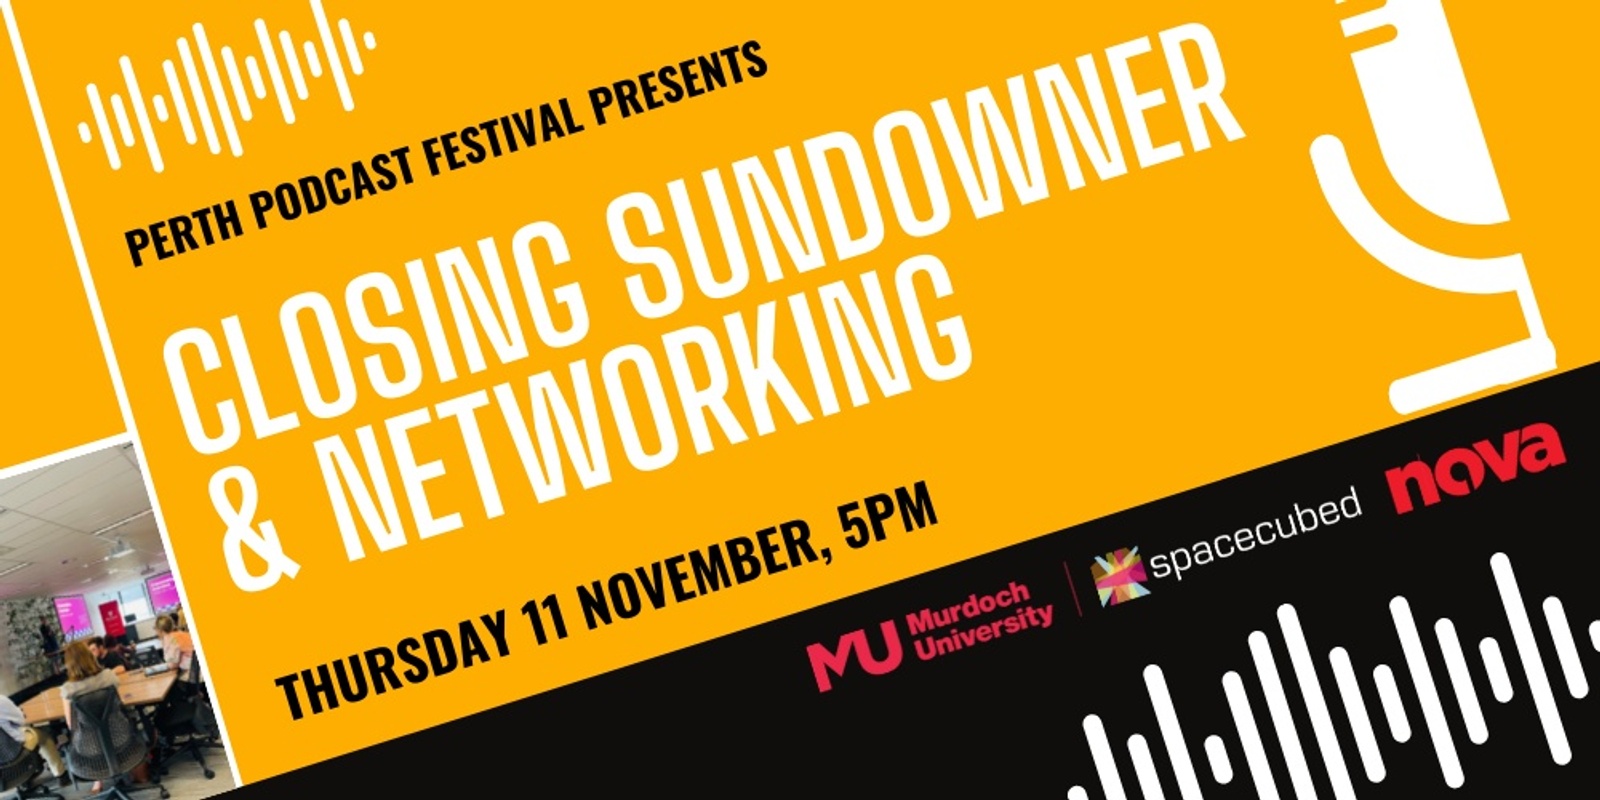 Banner image for Perth Podcast Festival 2021: Closing Sundowner & Networking